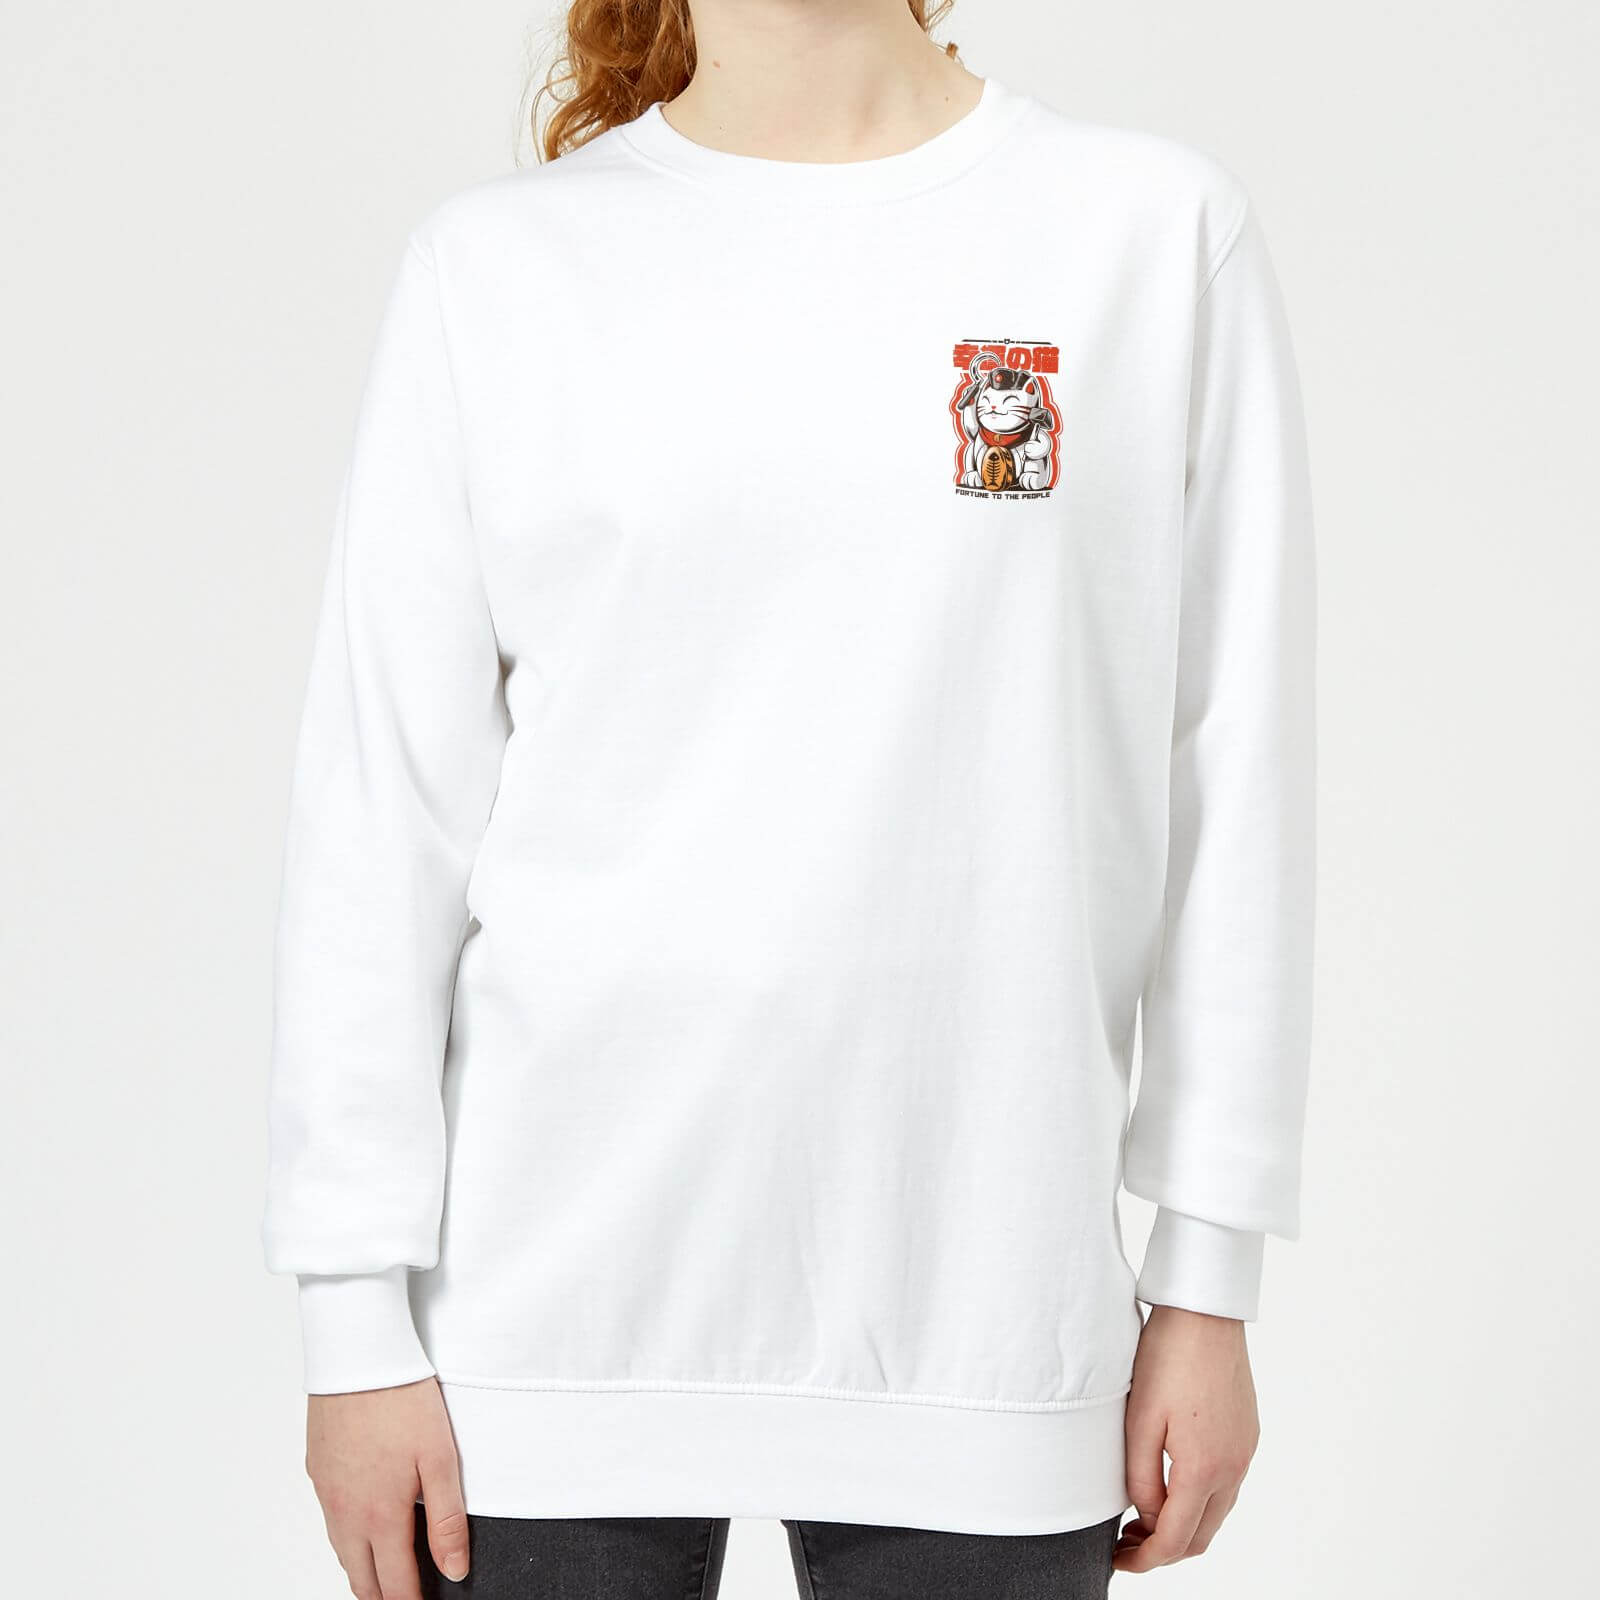 Ilustrata Catunist Women's Sweatshirt - White - XS